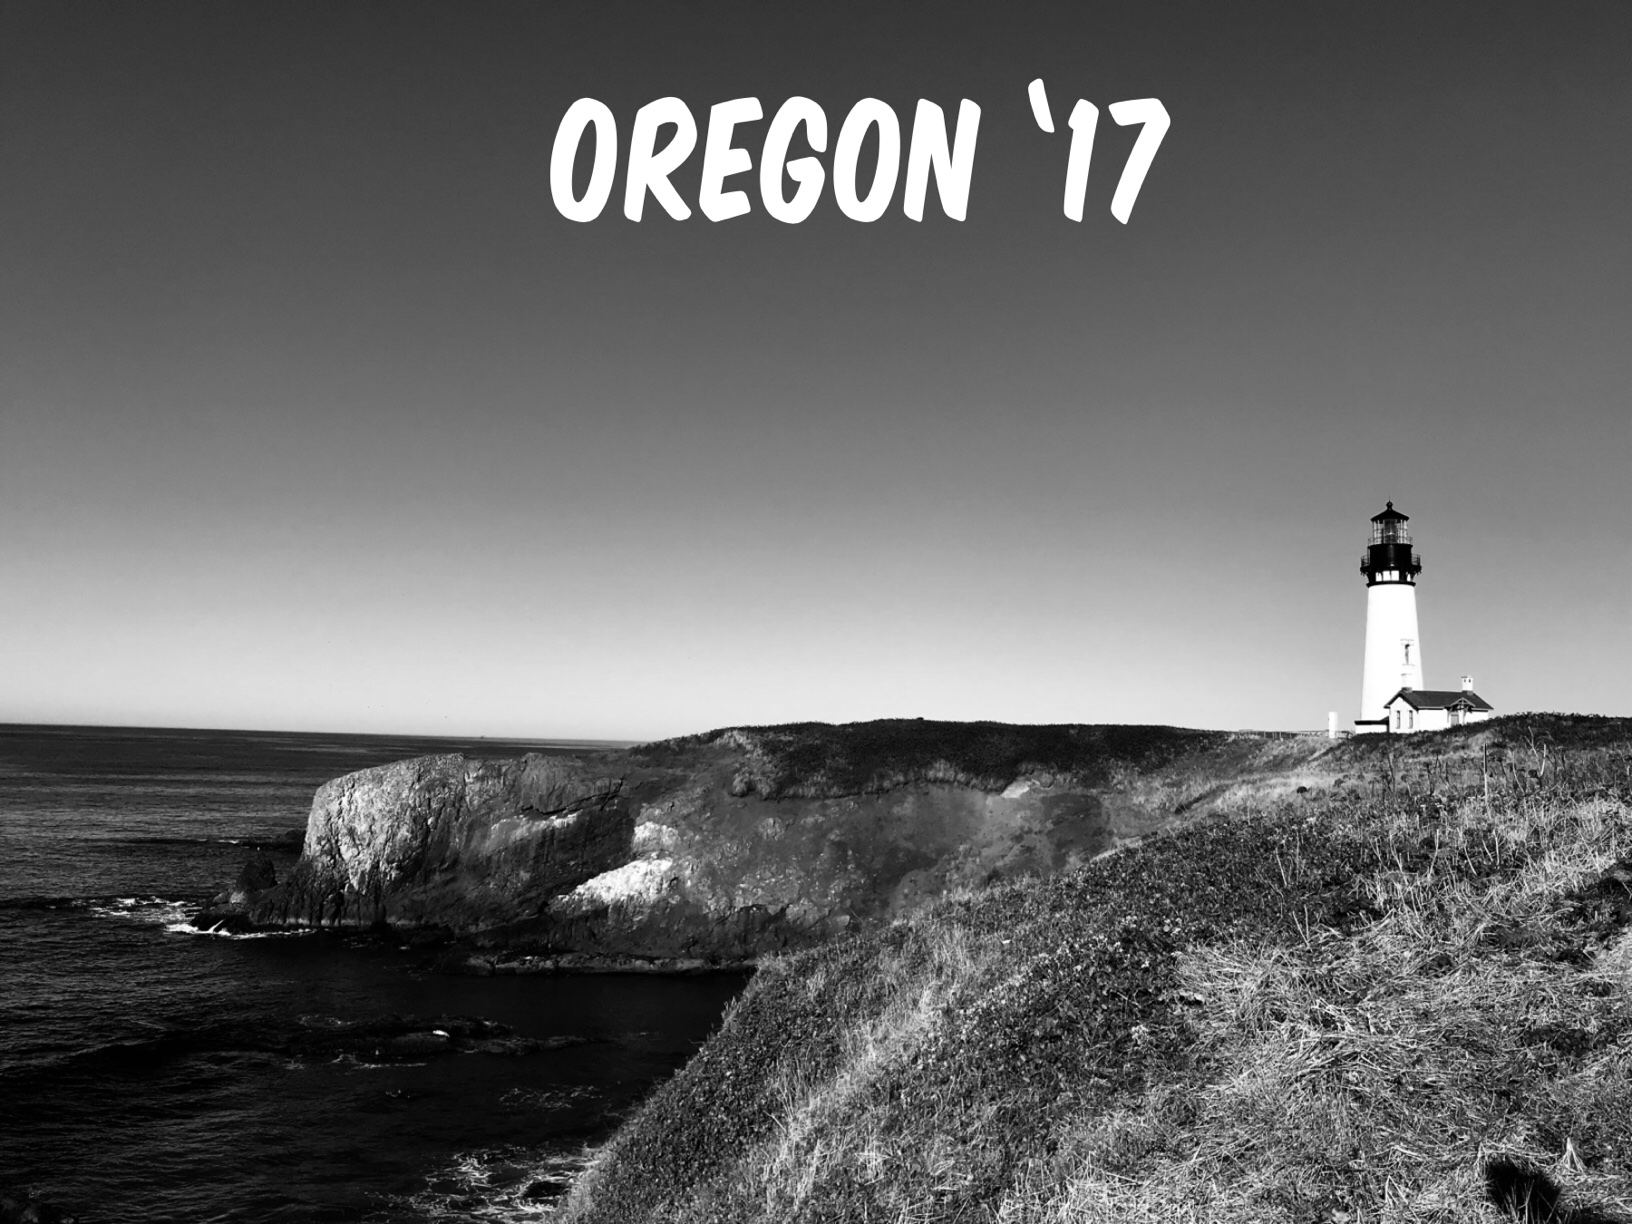 Oregon ‘17